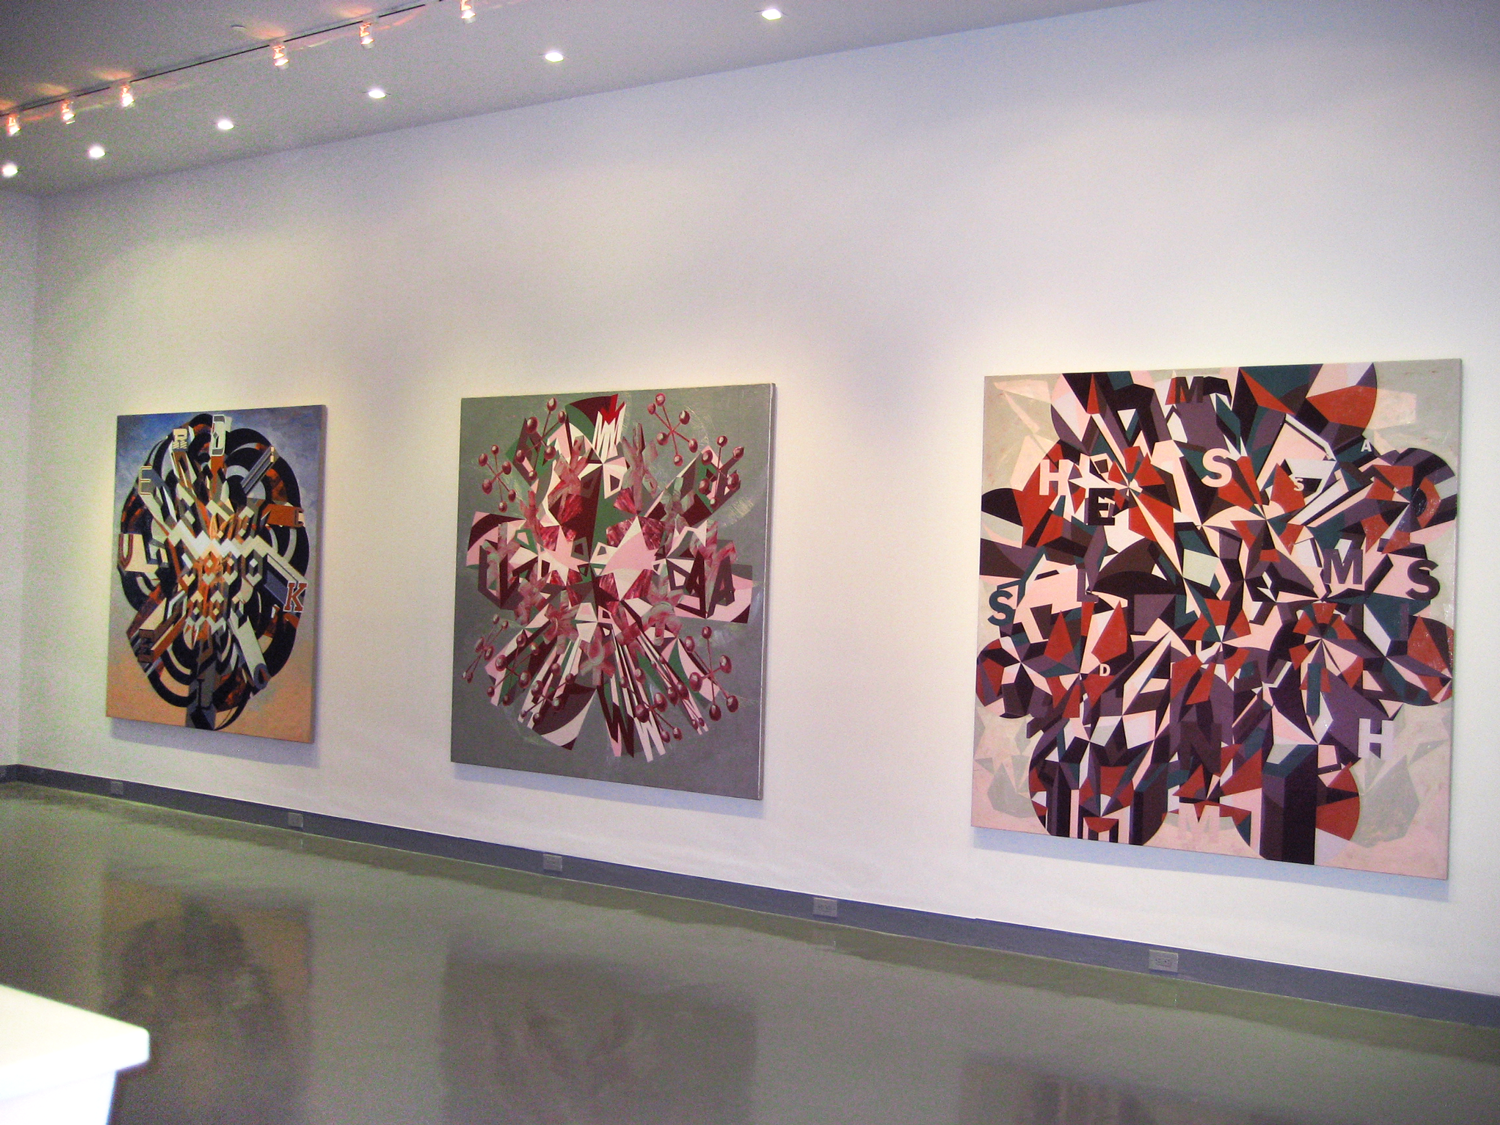  Martine Chaisson Gallery, New Orleans, 2011 